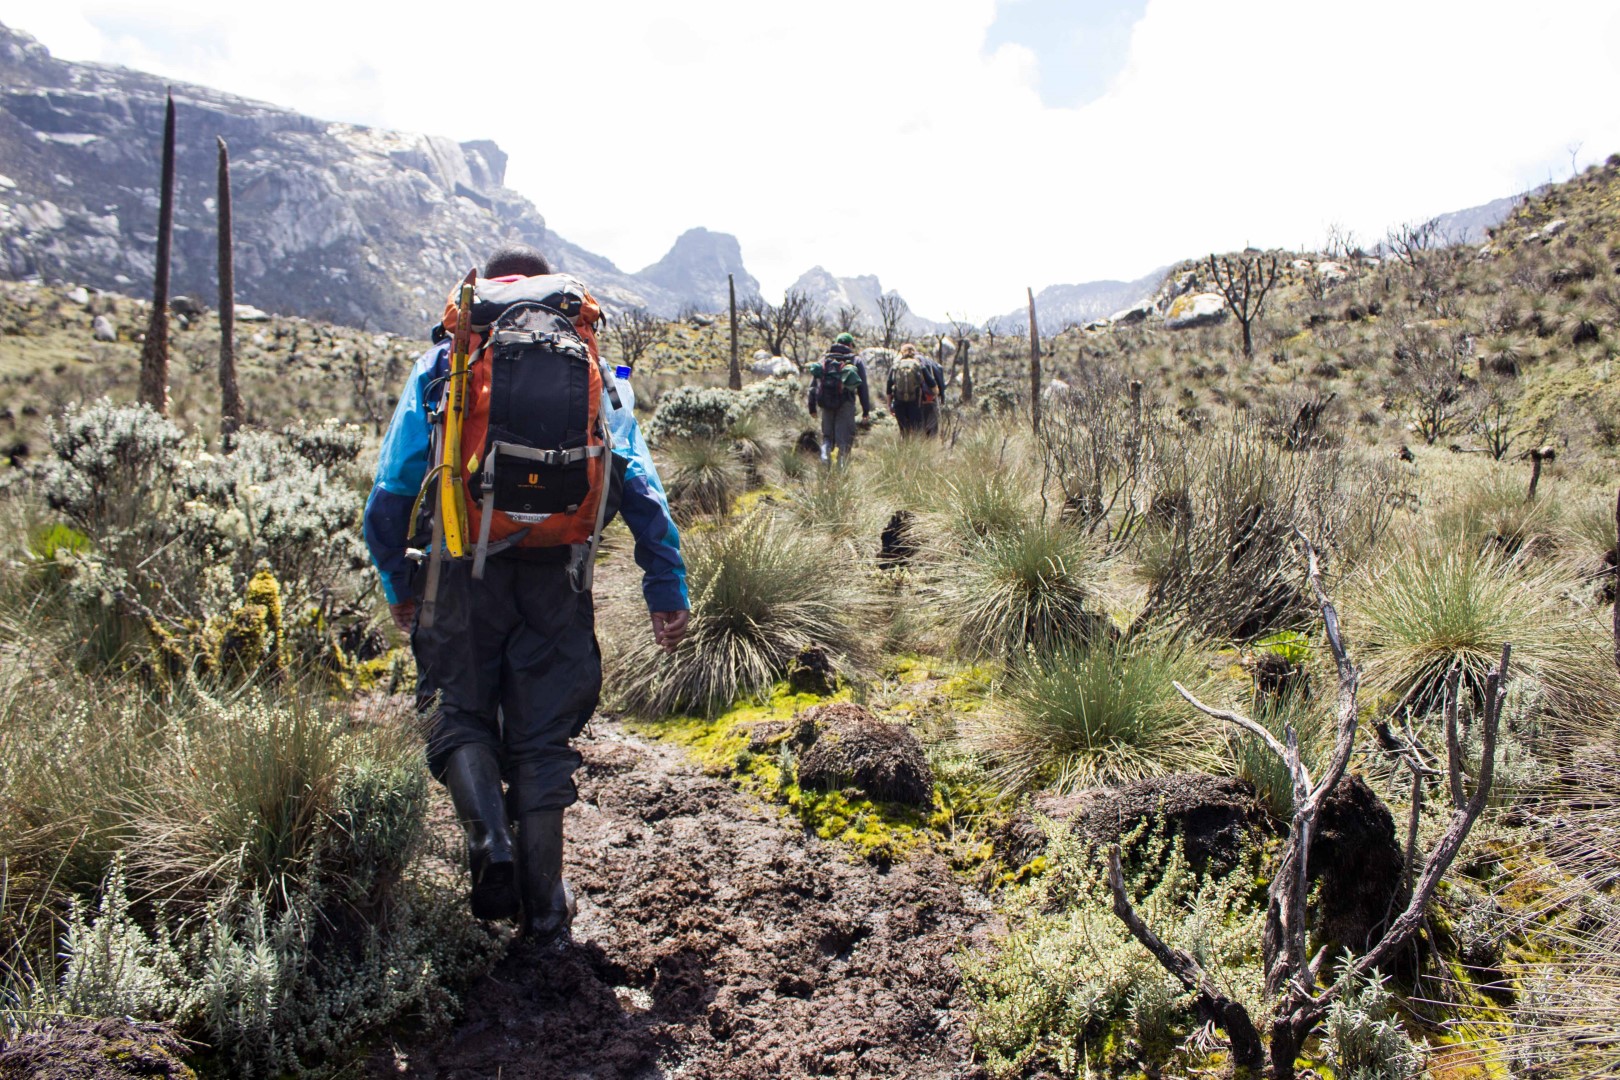 Hiking thorough the grasslands of Rwenzori mountain ranges in Rwenzori Mountain National Park.